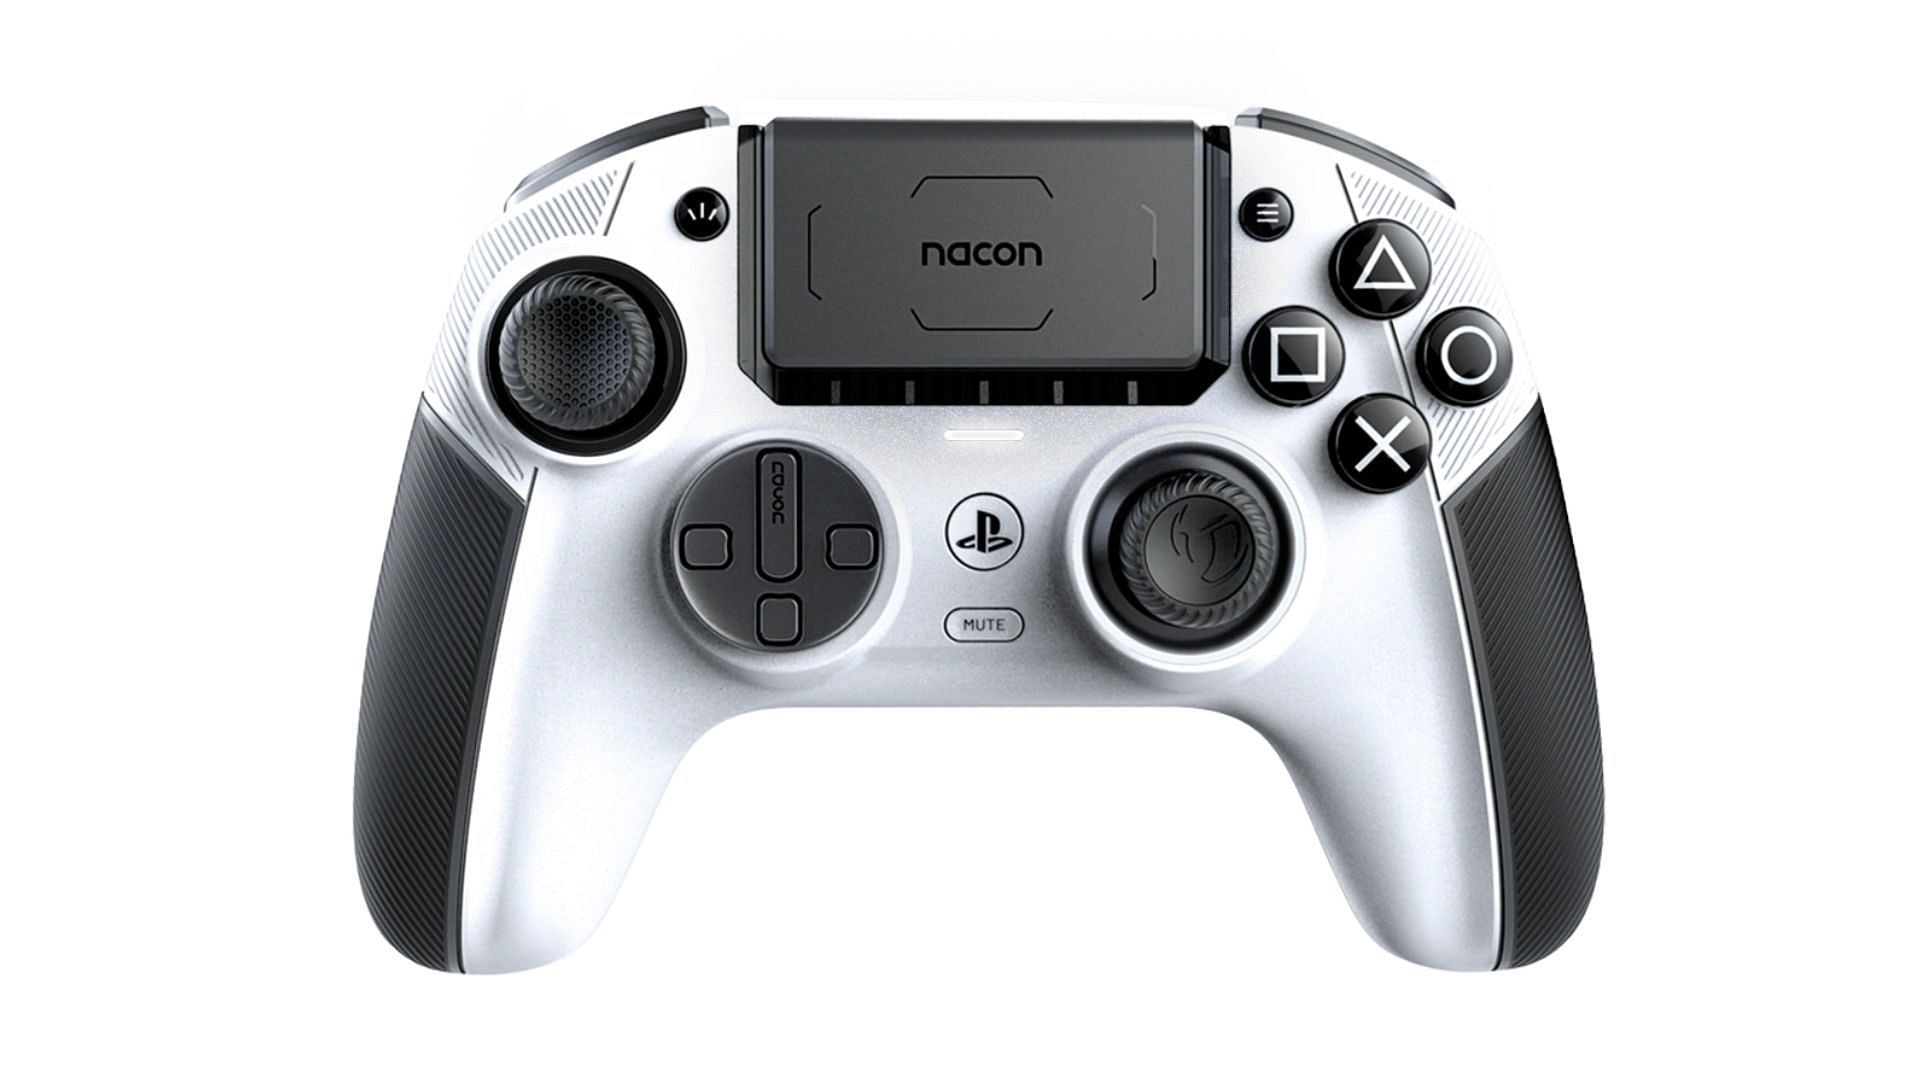 Premium controller for PC gaming (image via Nacon)